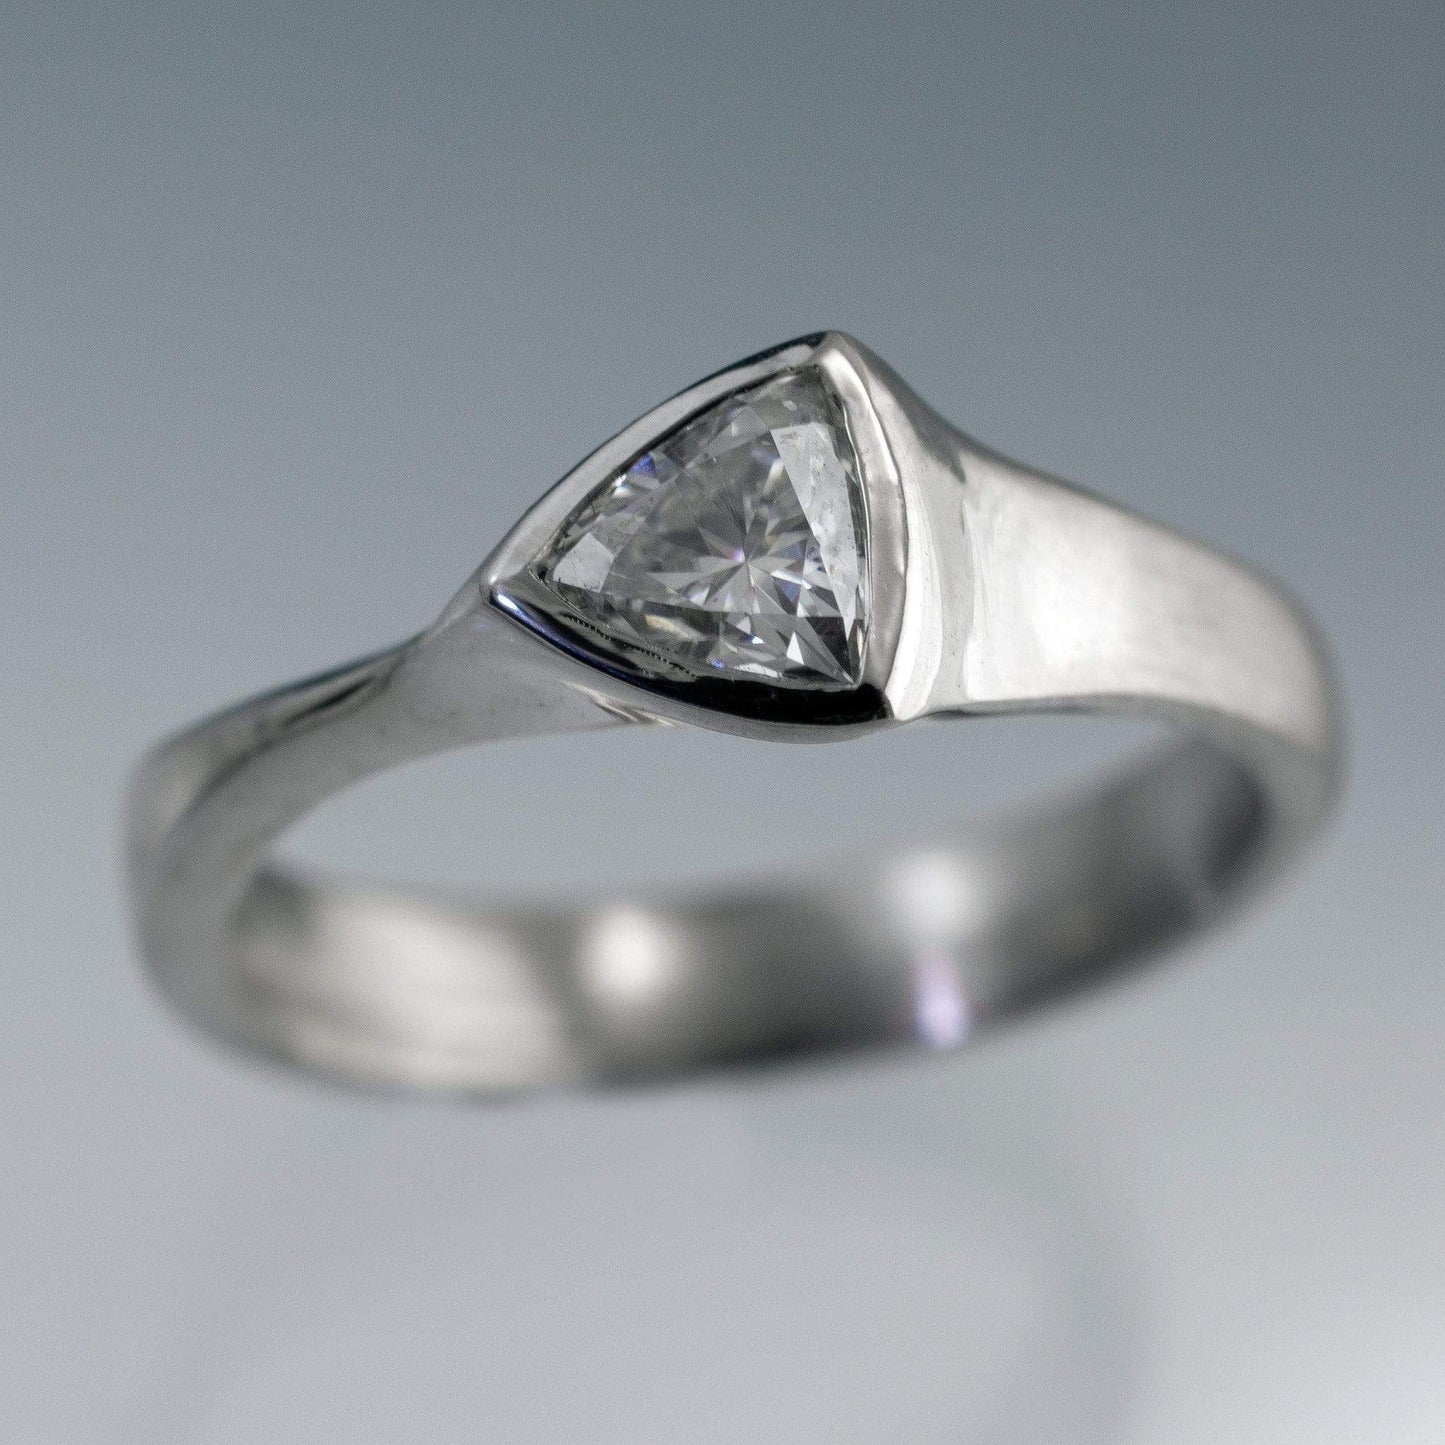 Trillion Moissanite Bezel Solitaire Engagement Ring Ring by Nodeform